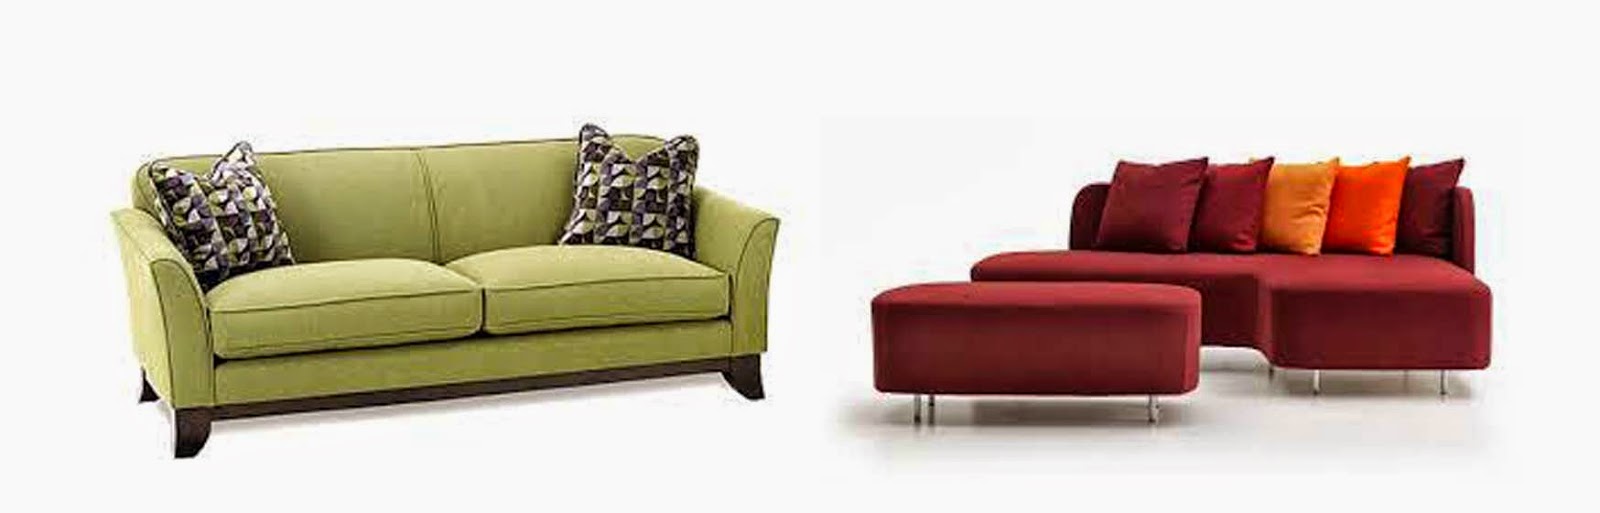 Cara Memilih Harga Kursi  Sofa  Minimalis Terbaru 